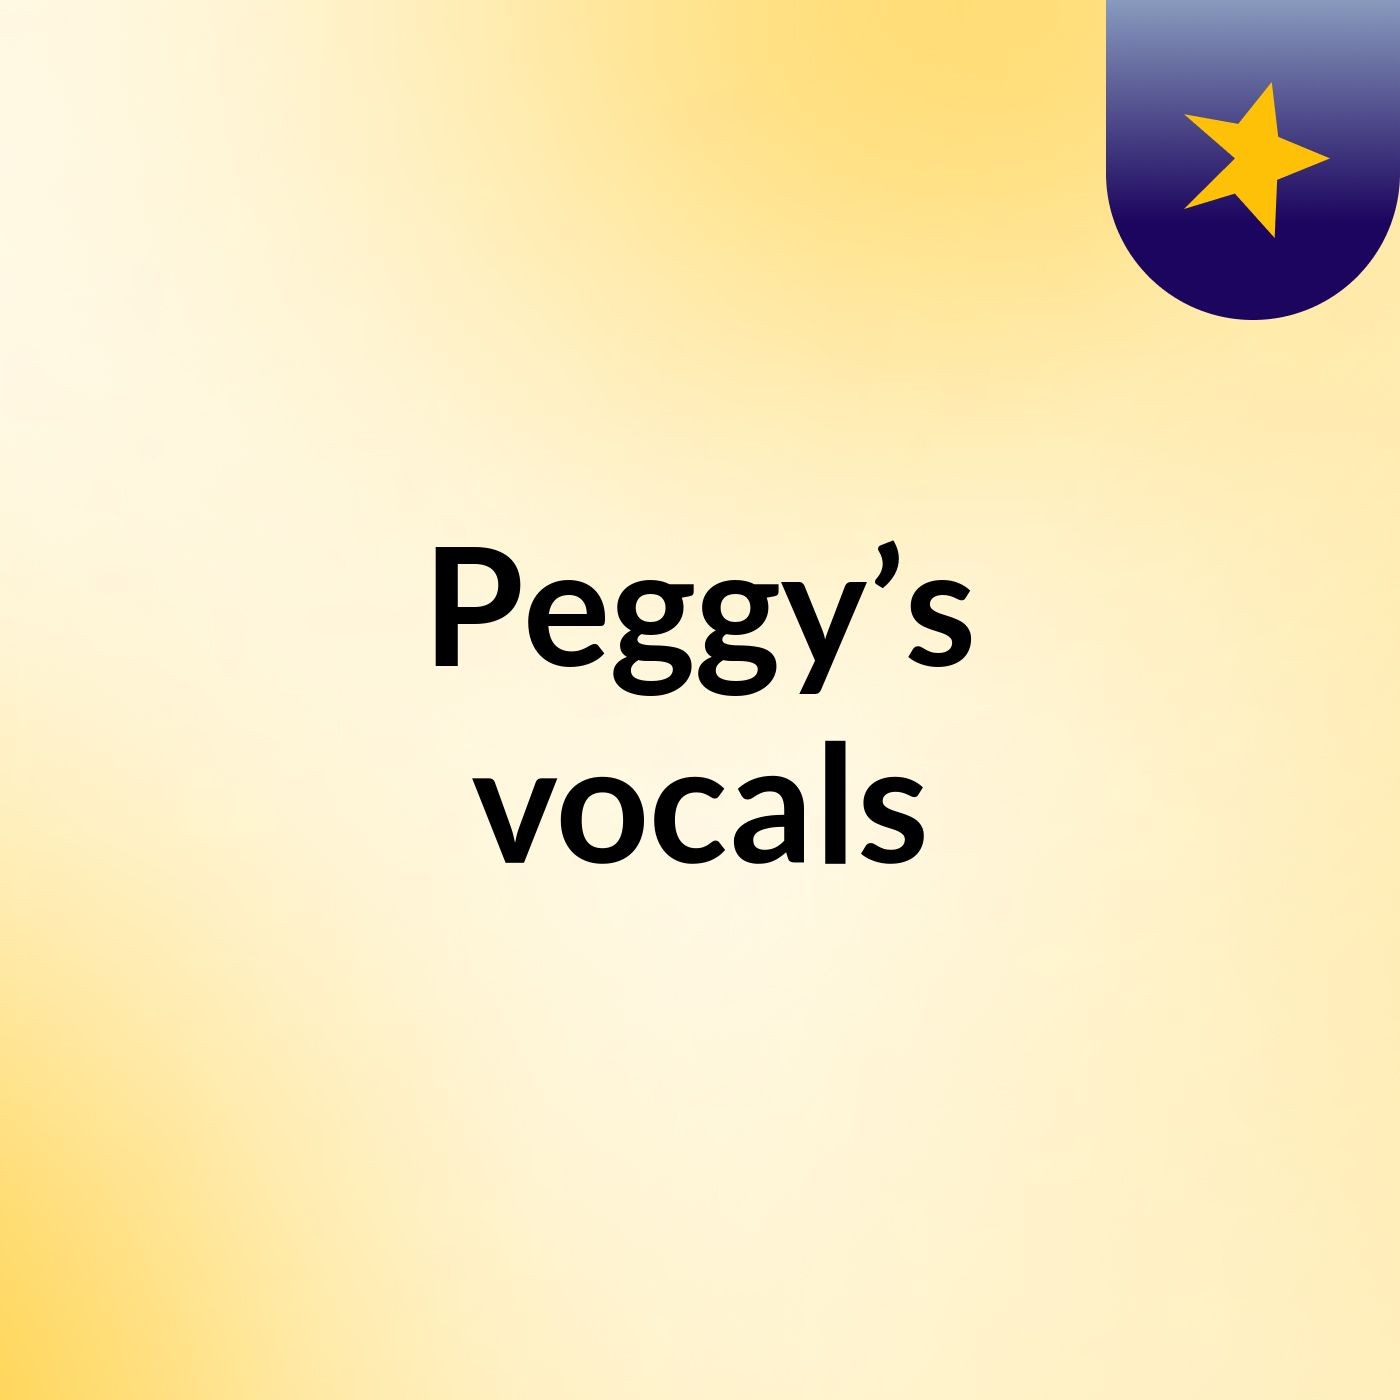 Peggy’s vocals